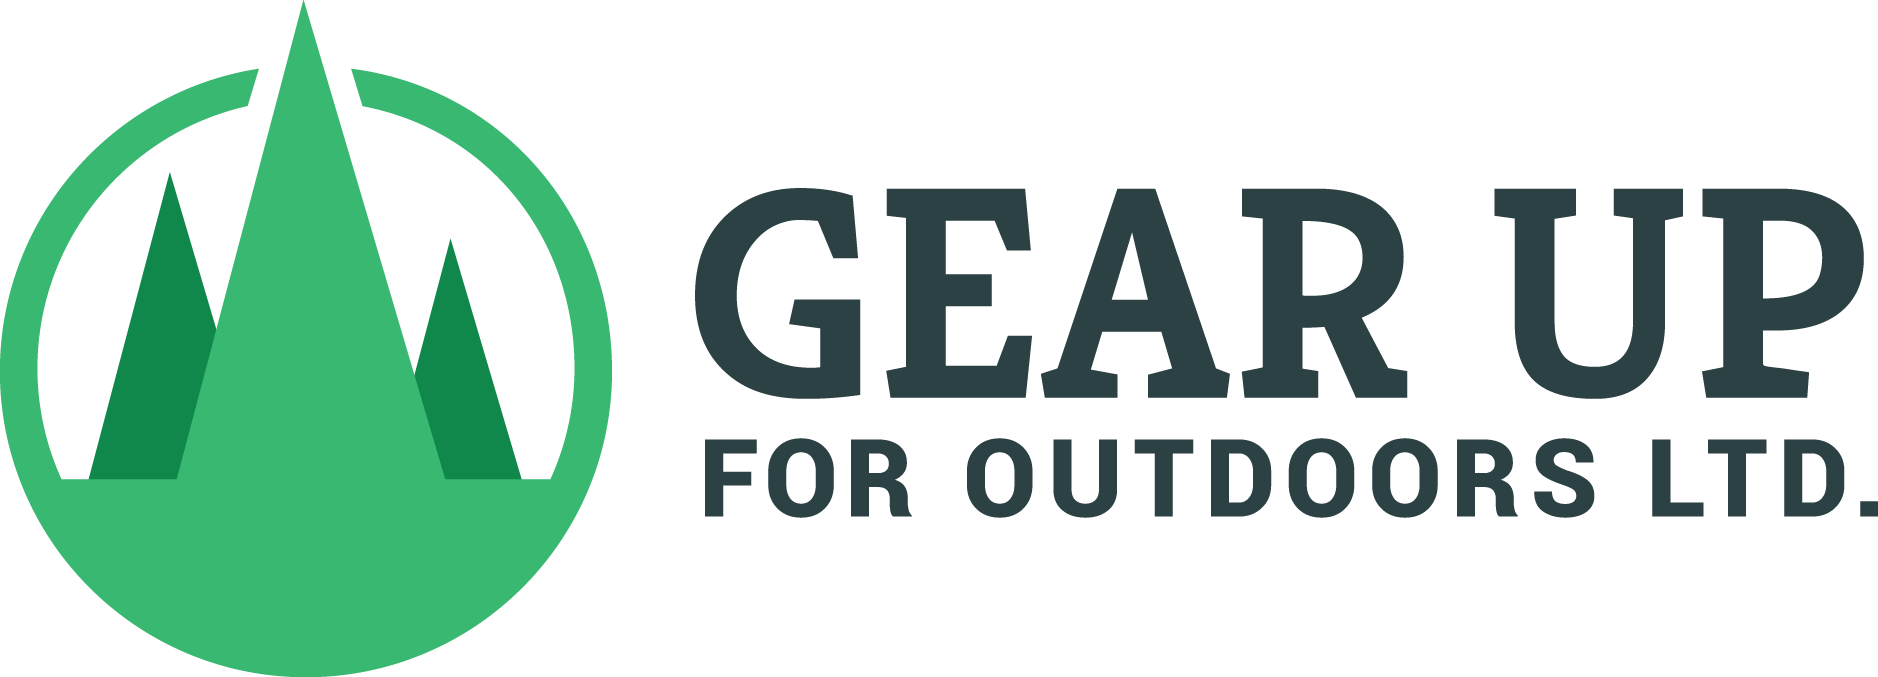 Outdoor Gear Logo - Savings & CAA Rewards | Gear Up For Outdoors | CAA NEO